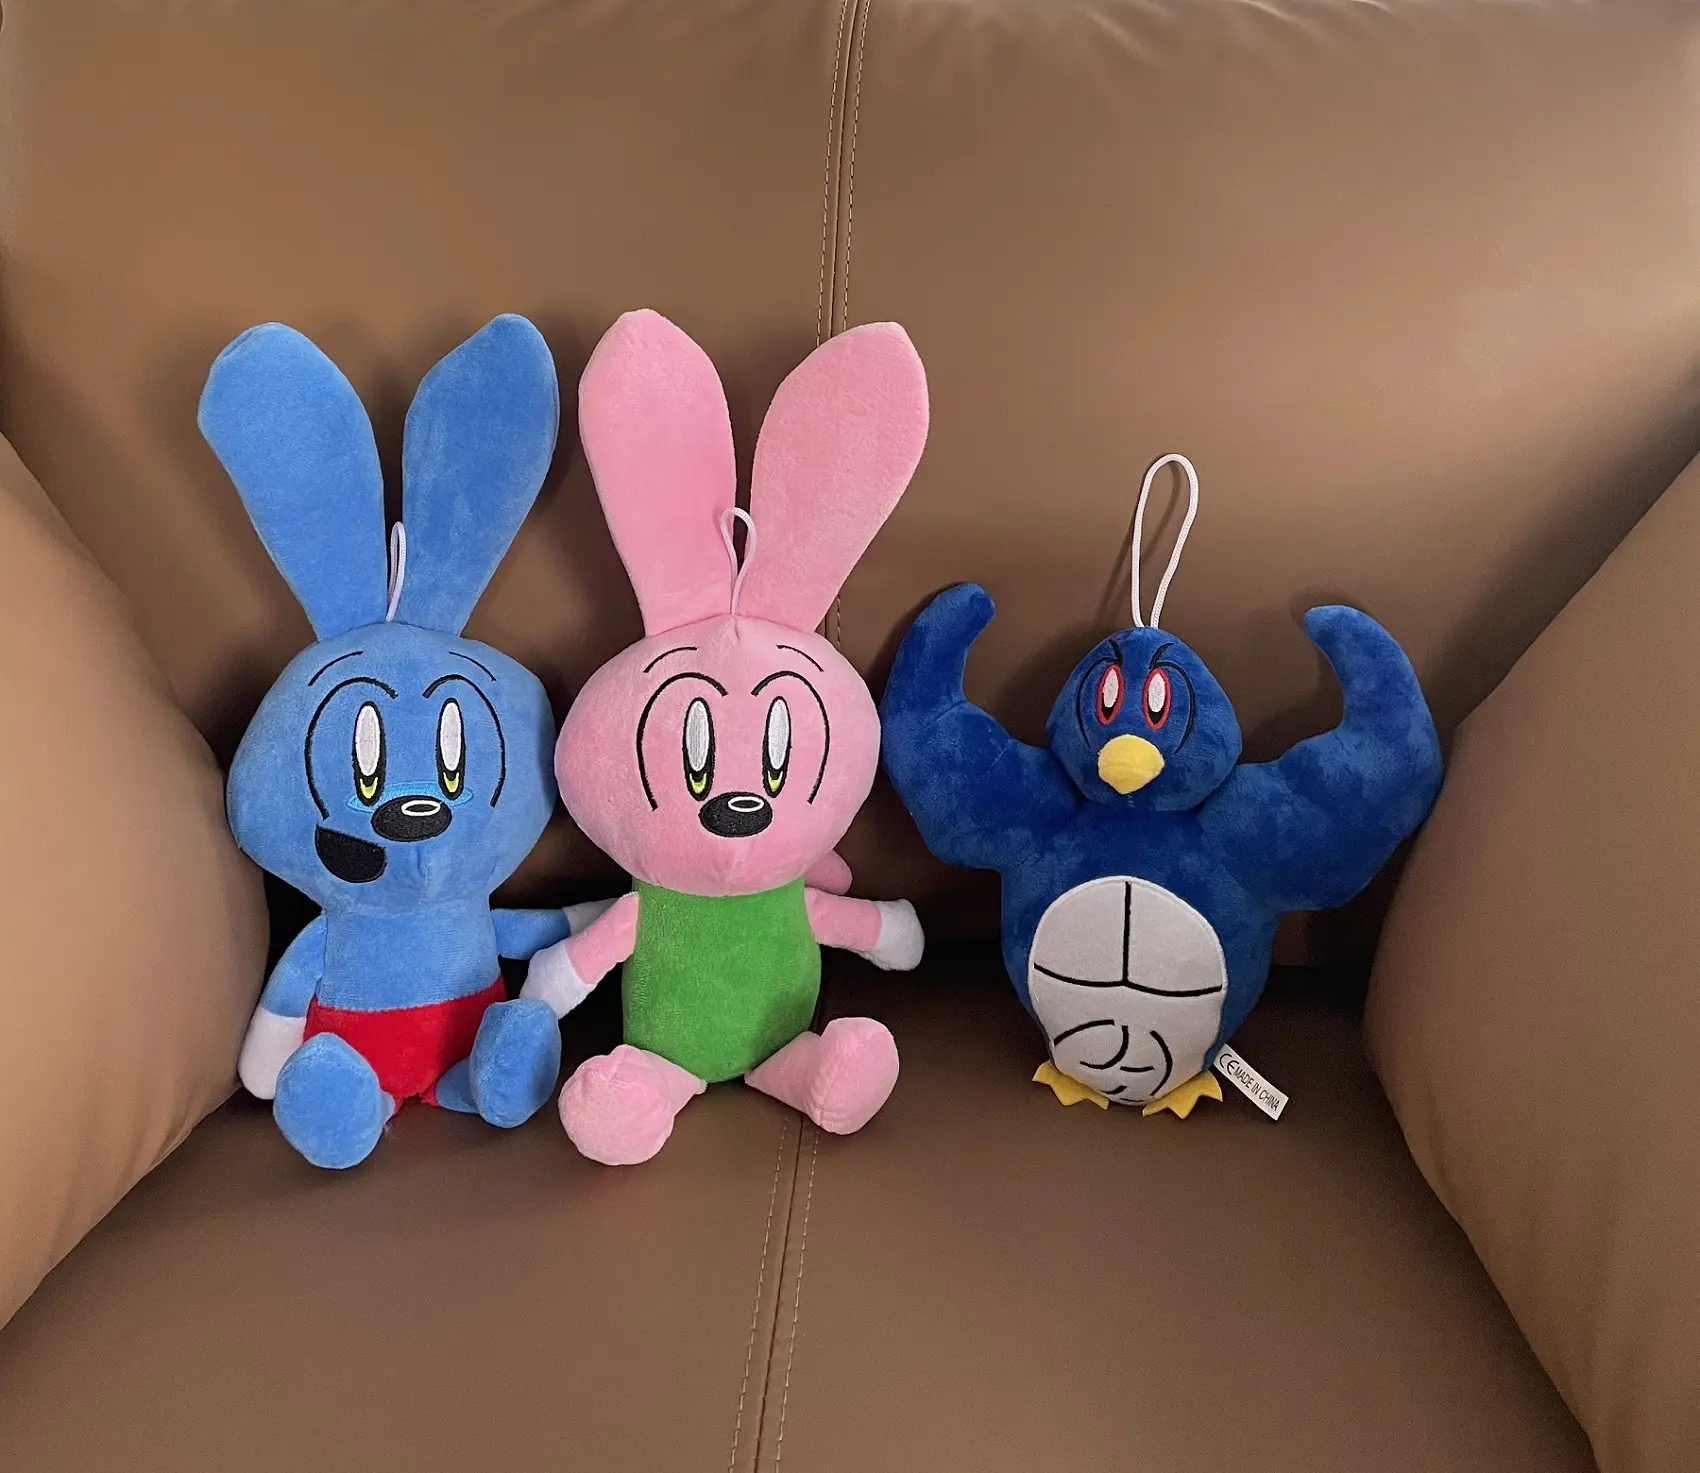 Riggy Monkey juguetes de peluche rosa azul conejo muñeca Riggy mono conejo juguete de peluche con orejas largas Anime juguetes Riggy el conejo mono